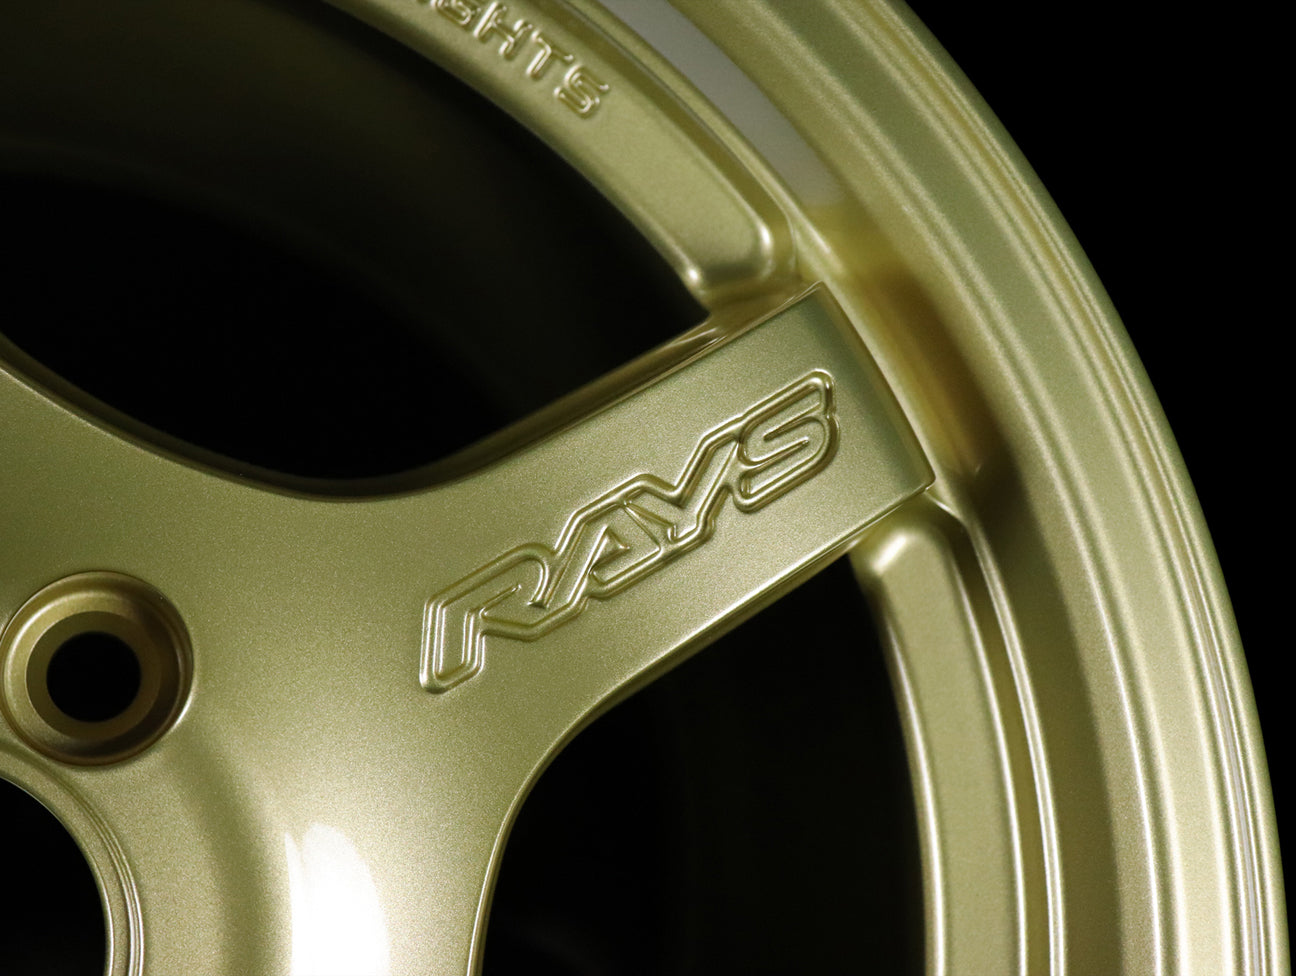 Rays Gram Lights 57CR Wheels - Eternal Gold Pearl 15x8.0 / 4x100